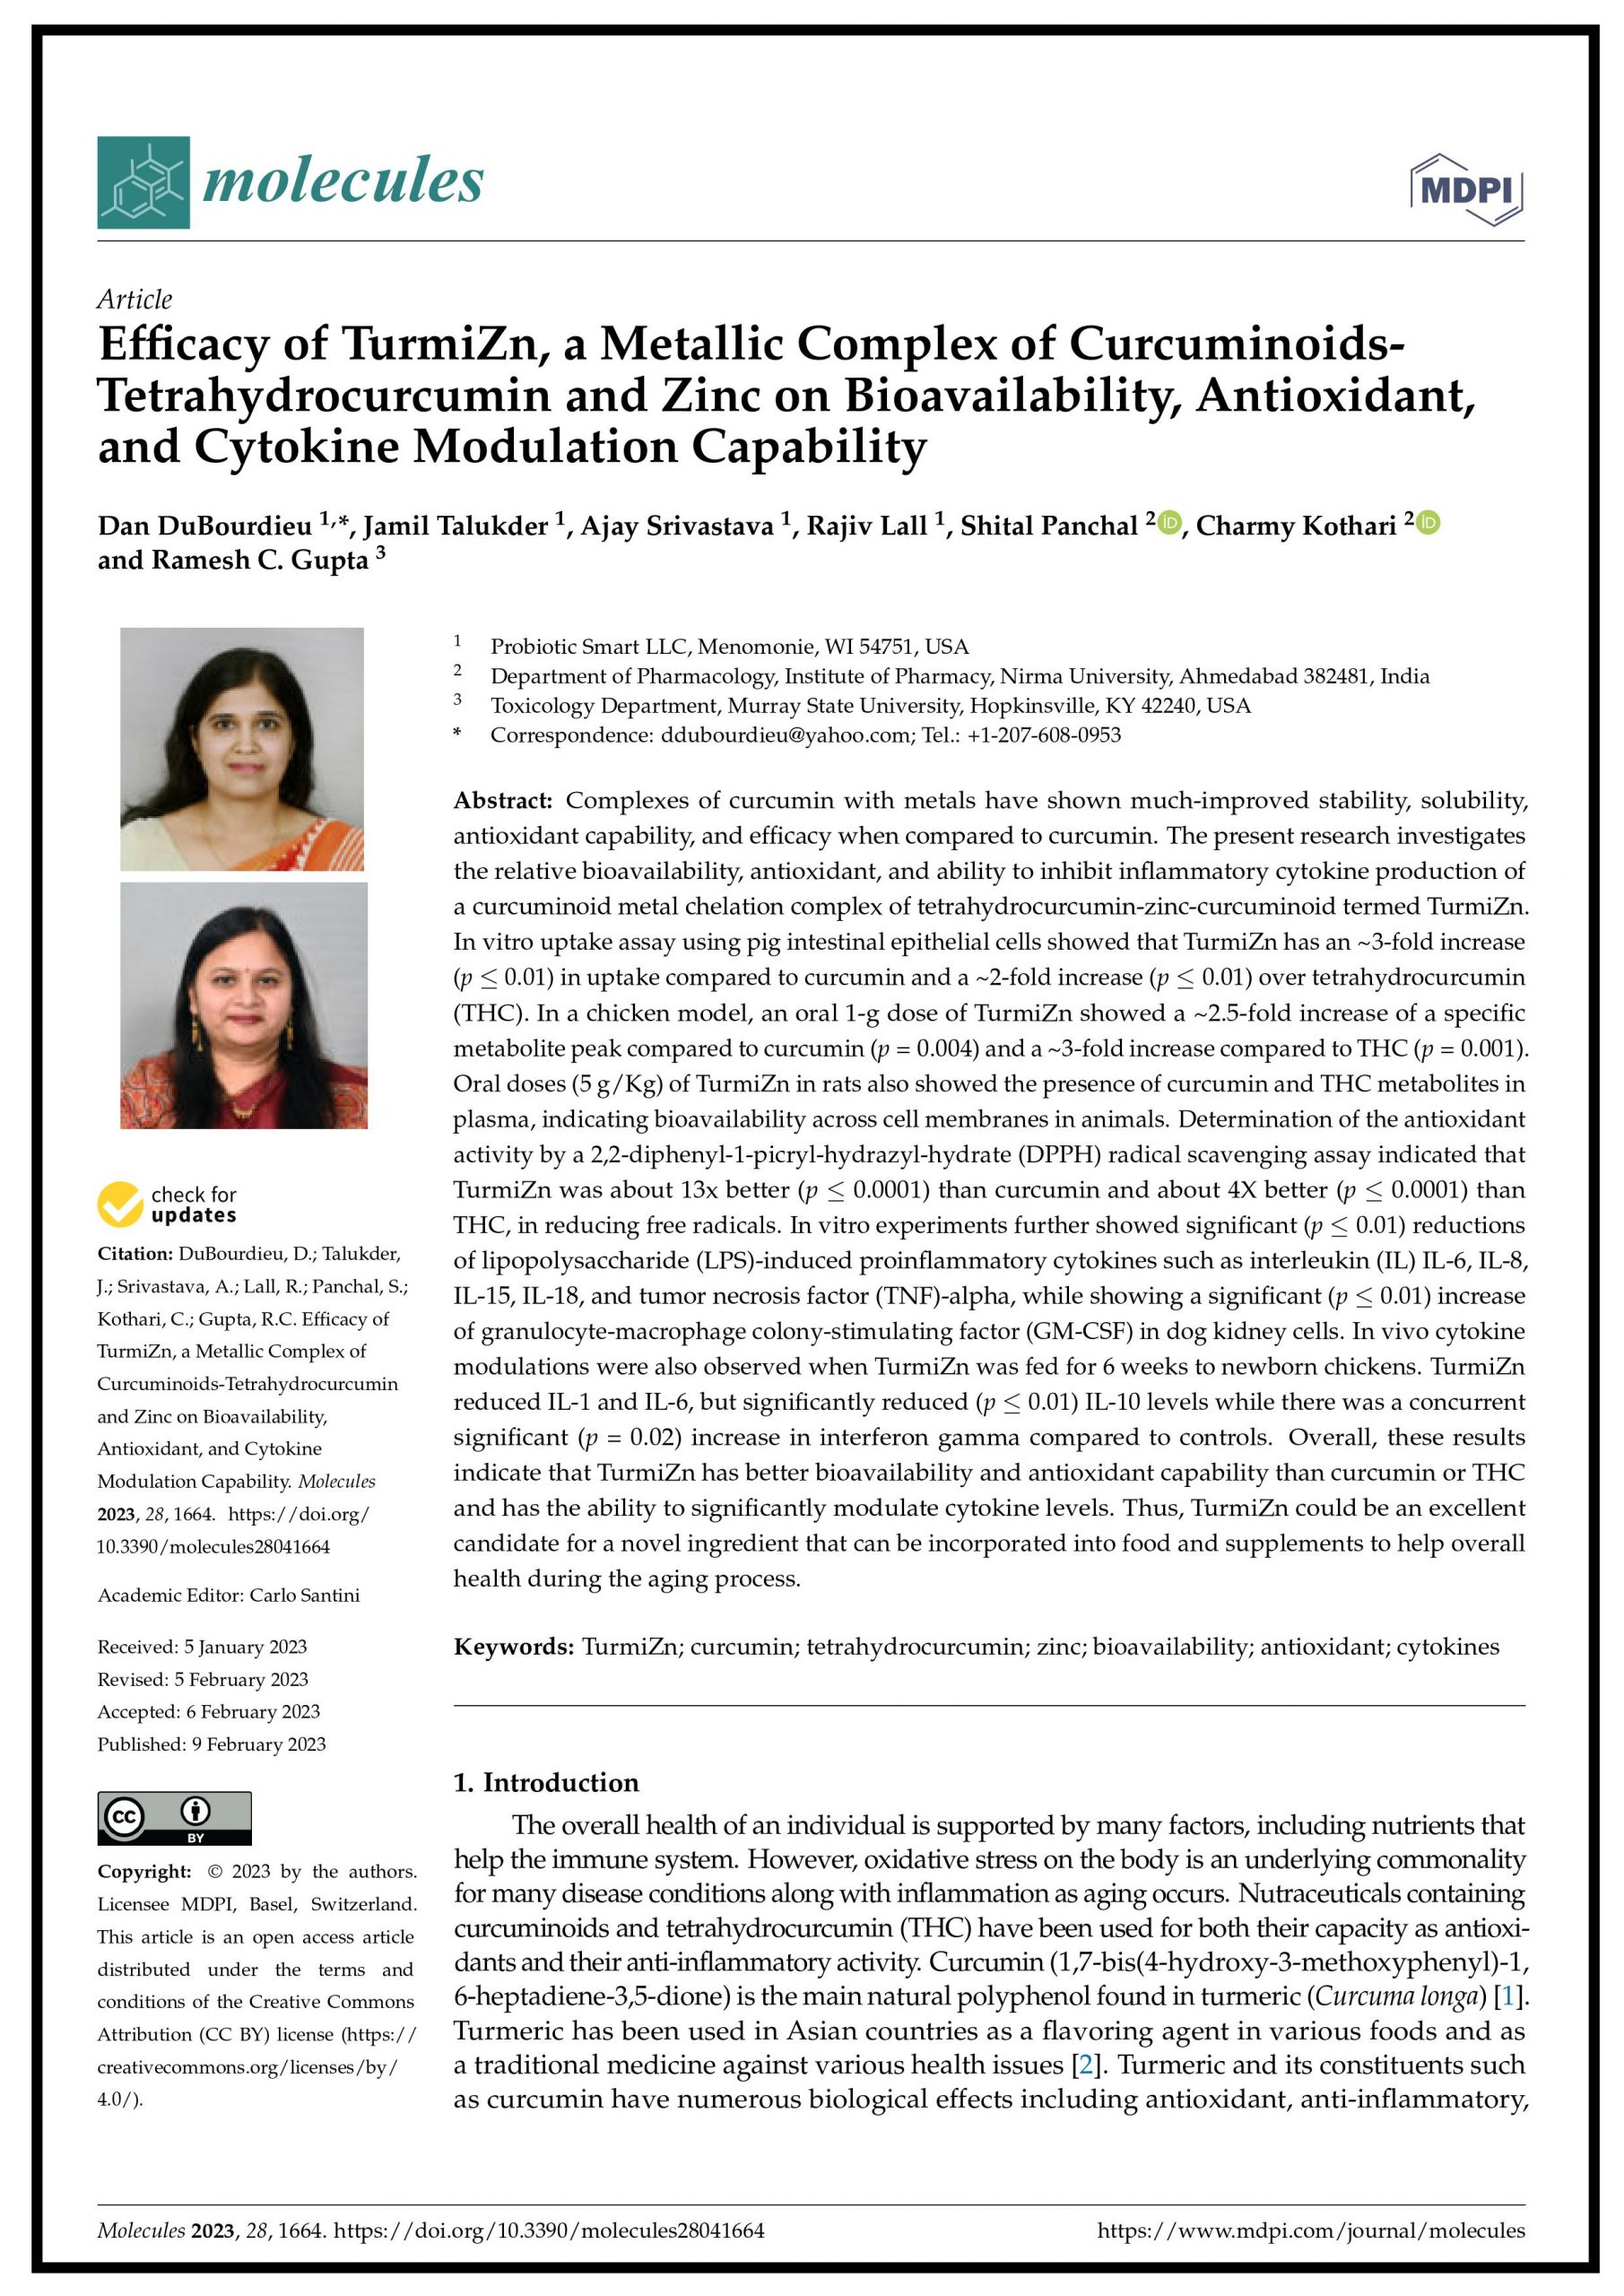 Efficacy of TurmiZn, a Metallic Complex of Curcuminoids-Tetrahydrocurcumin and Zinc on Bioavailability, Antioxidant, and Cytokine Modulation Capability